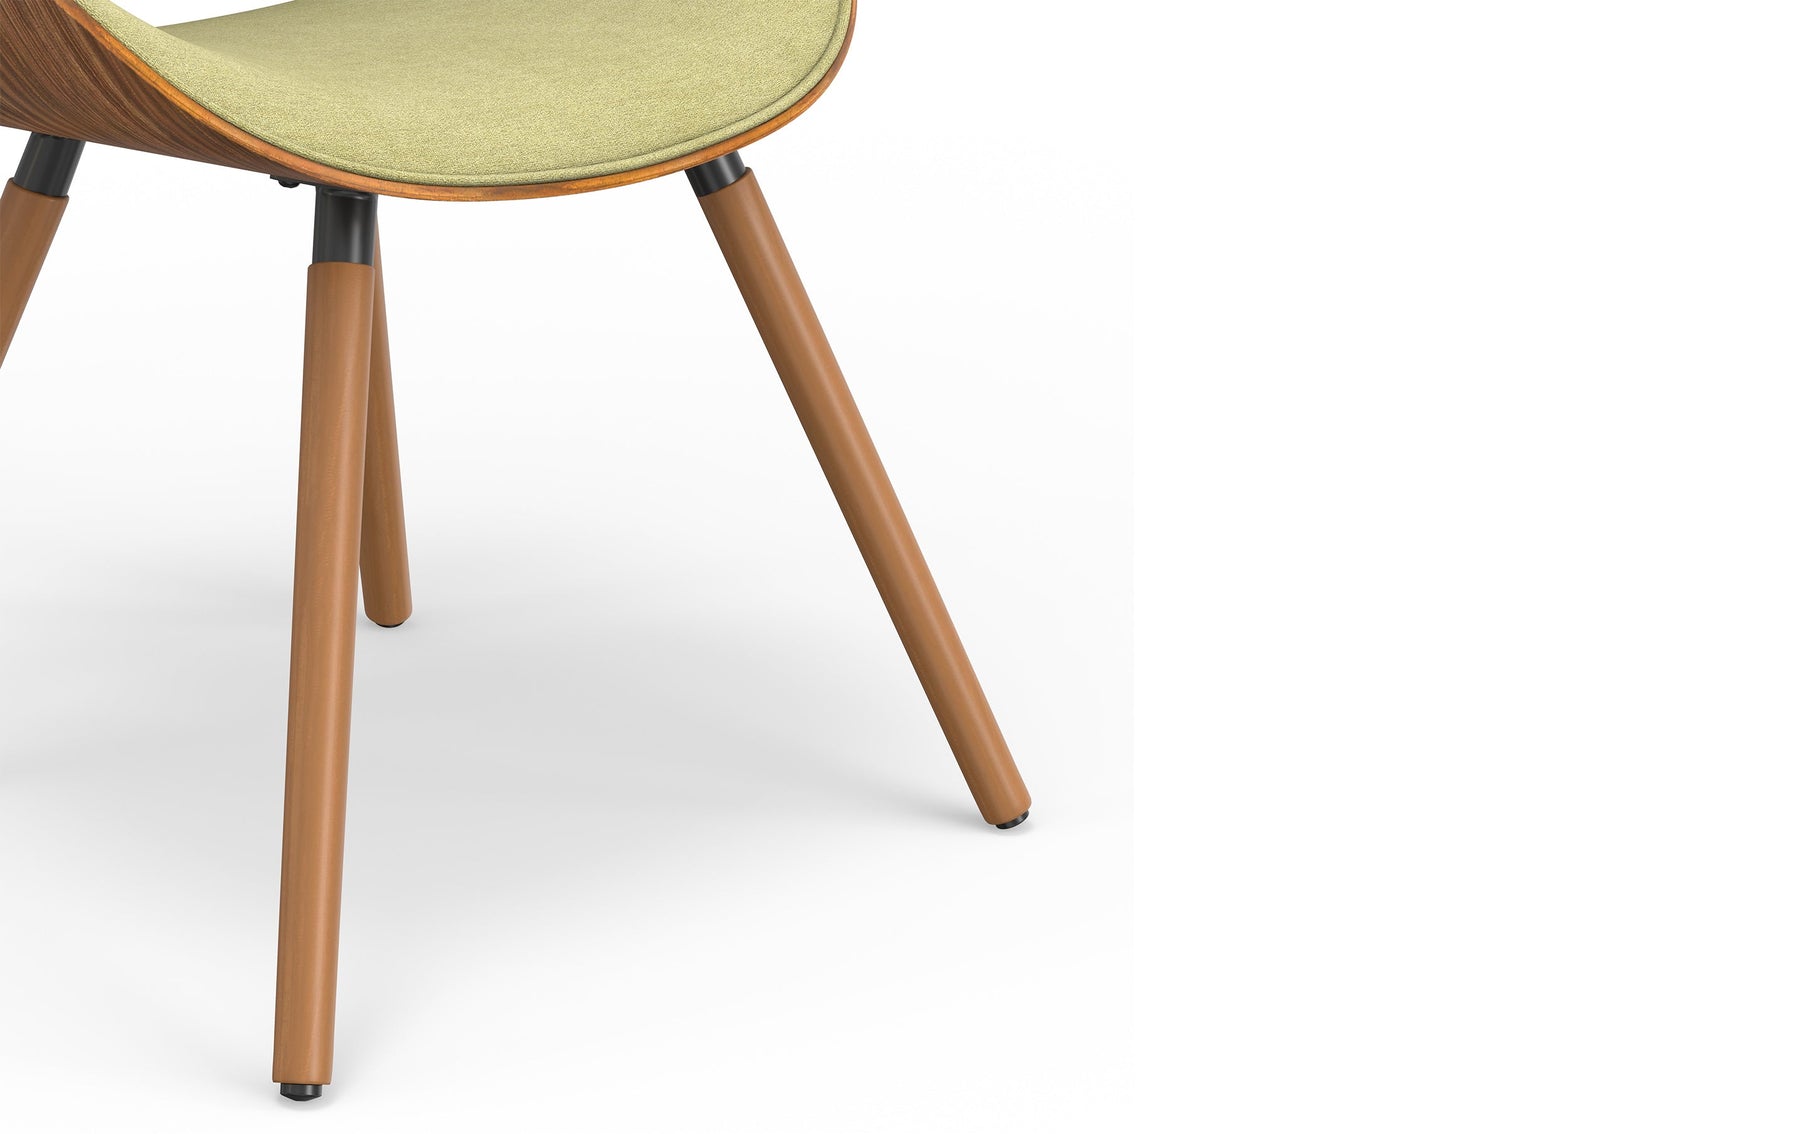 Acid Green Linen Style Fabric| Marana Dining Chair